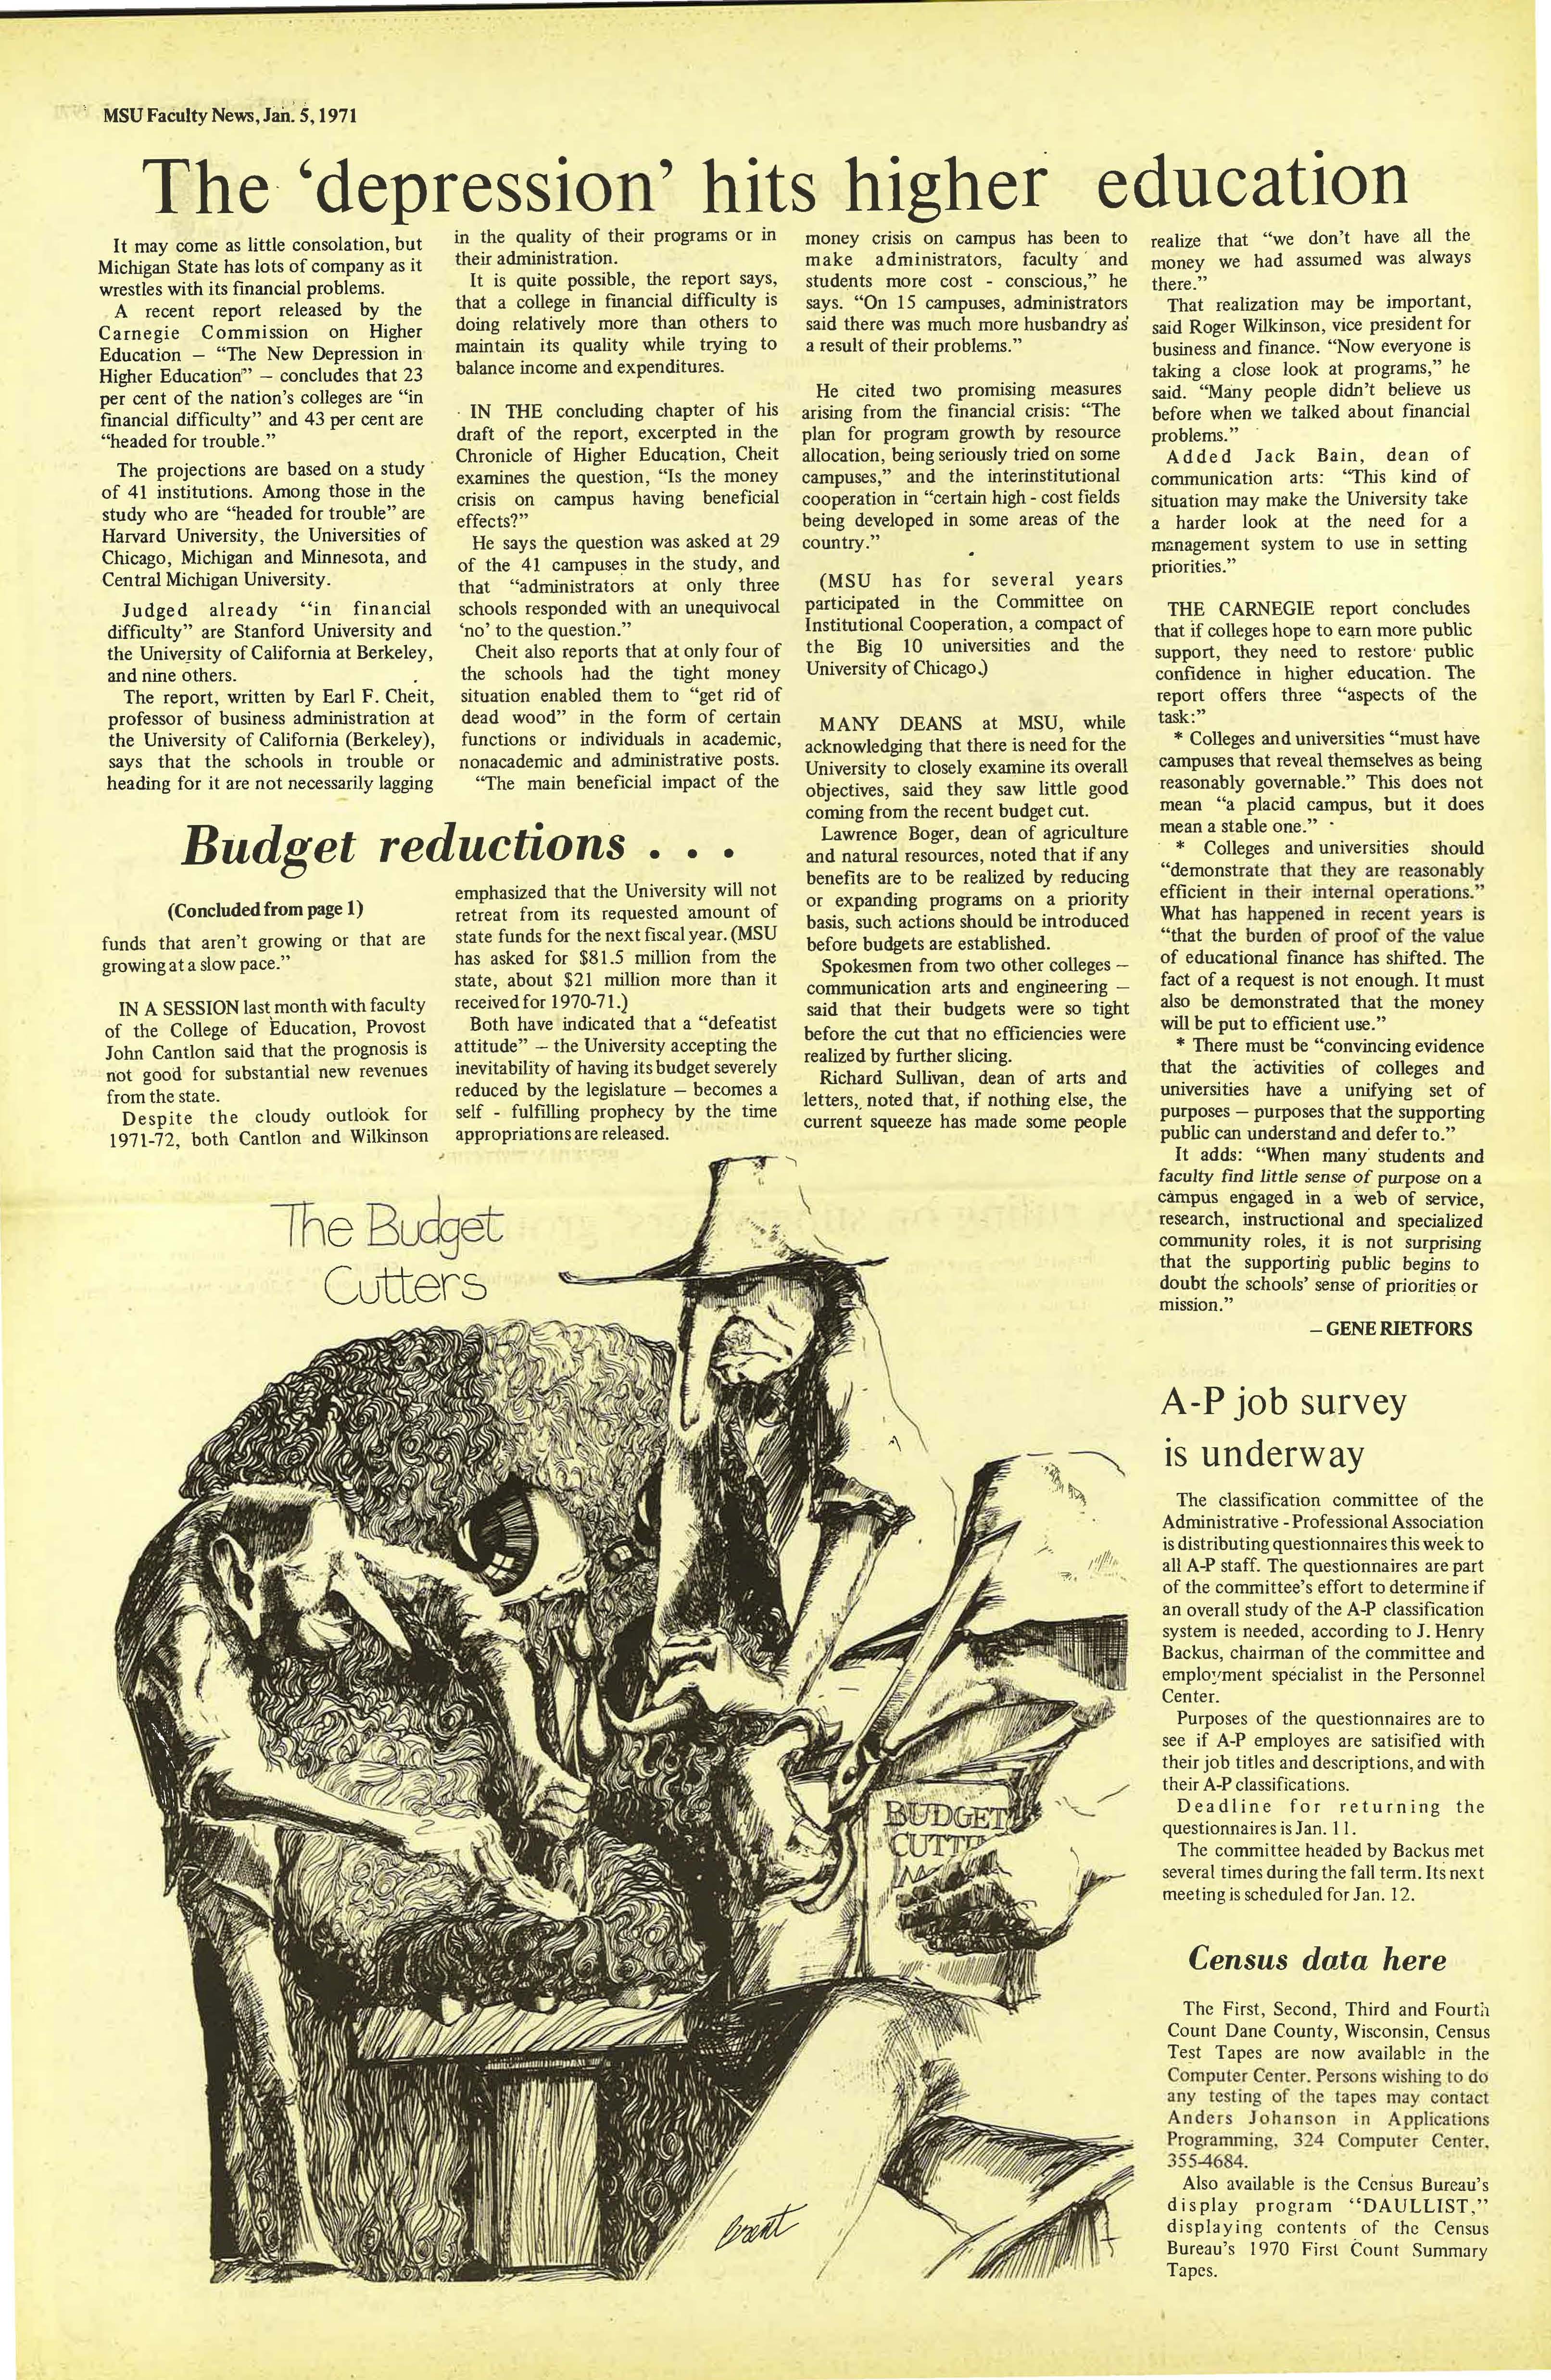 MSU News Bulletin, vol. 2, No. 34, August 12, 1971